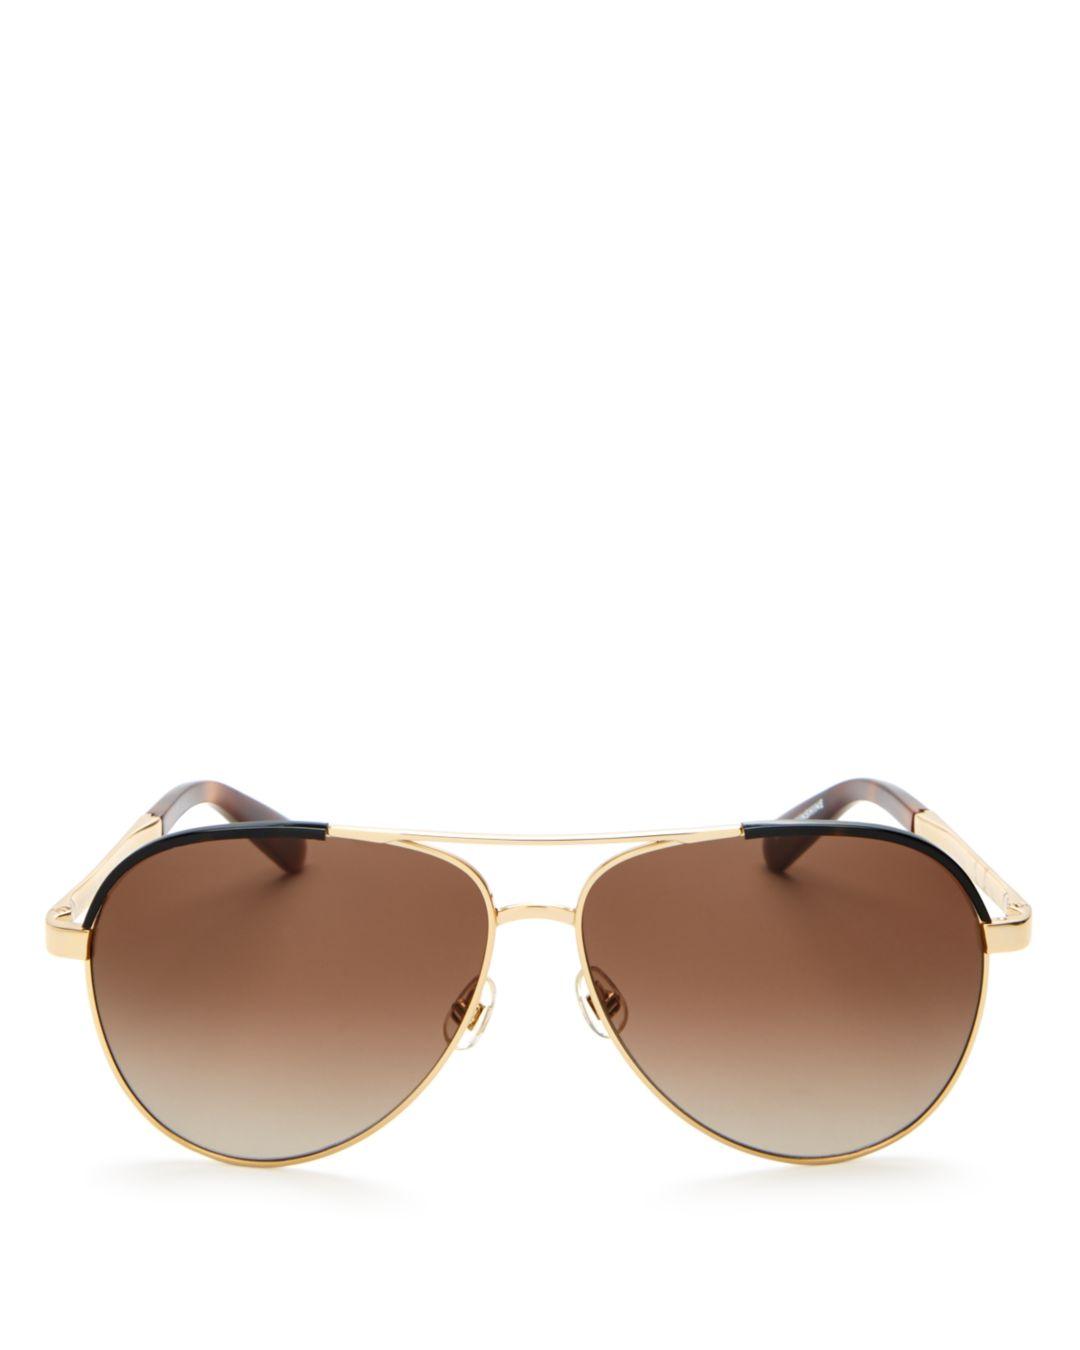 Kate Spade Women's Amarissa Aviator Sunglasses in Brown - Lyst